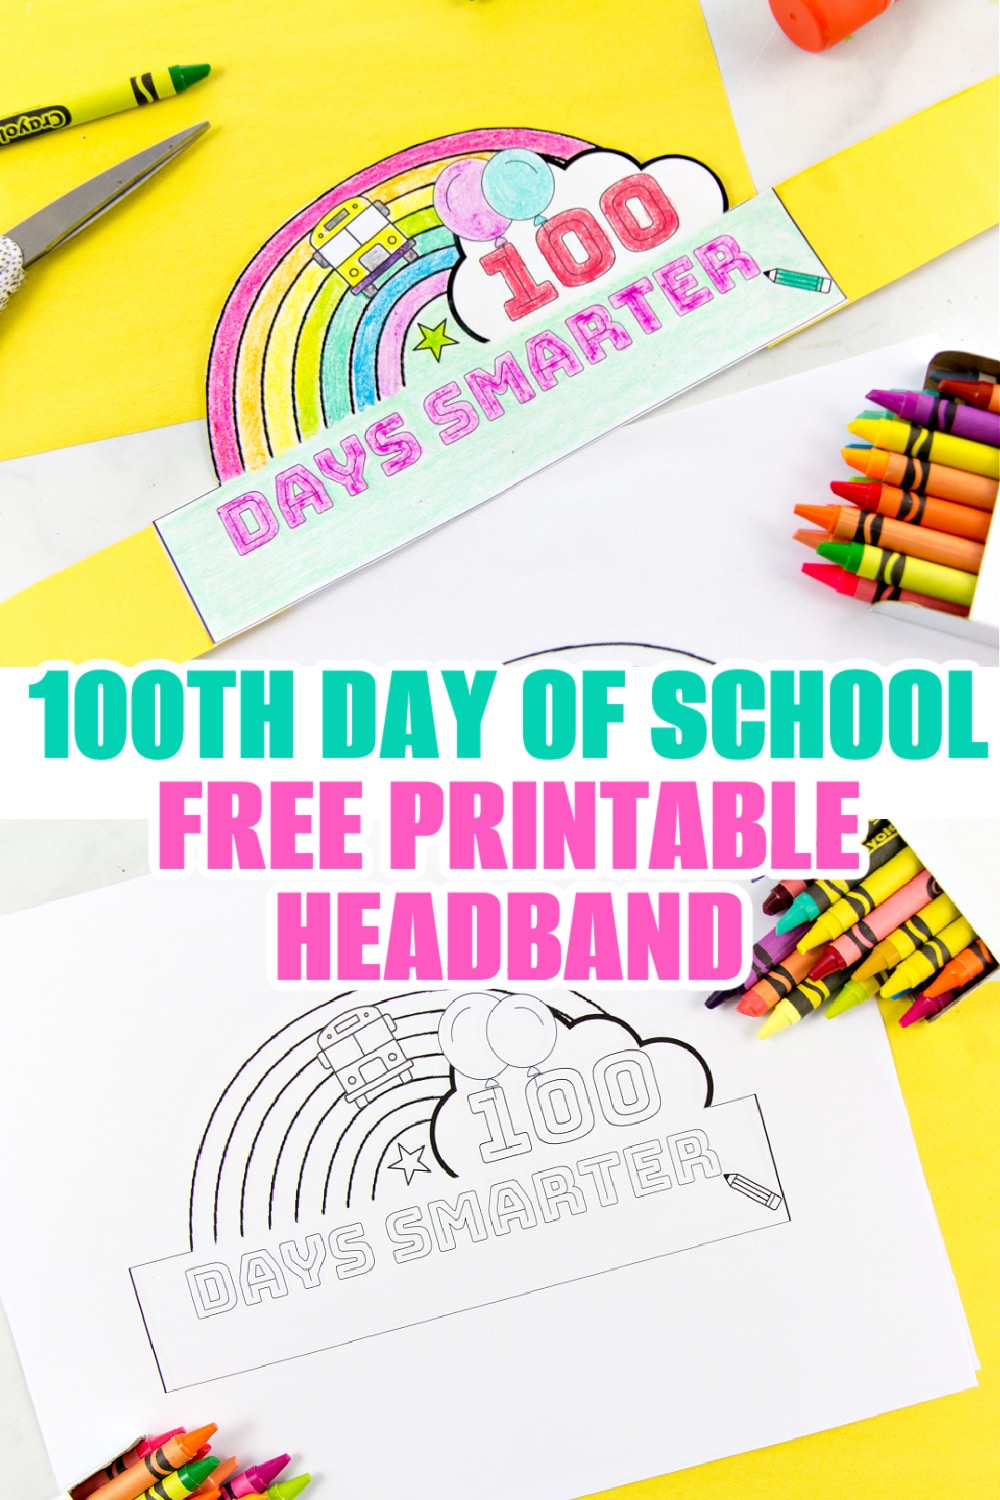 100th day of school free printable headband pinterest image